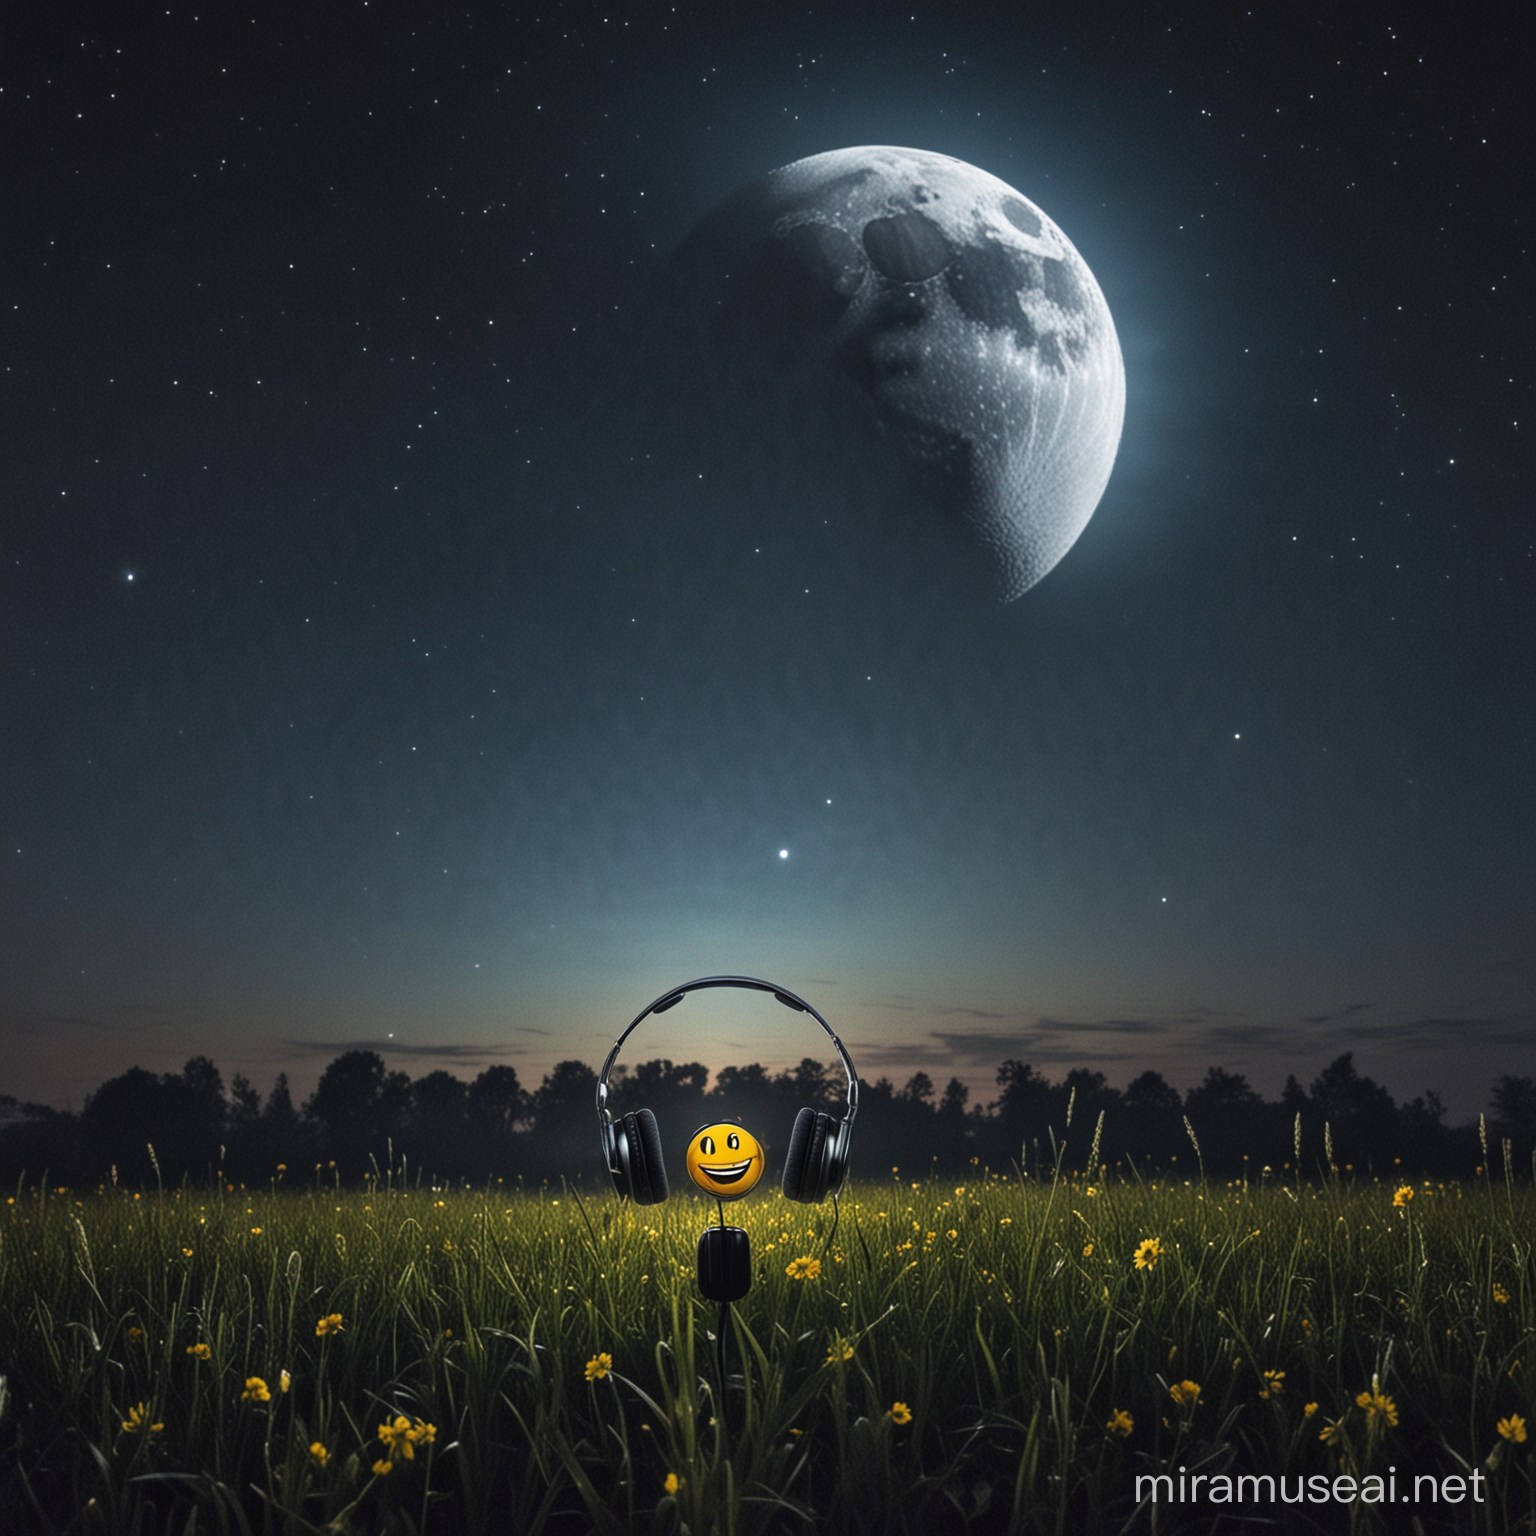 Moonlit Night with Cheerful Smiley Headphones